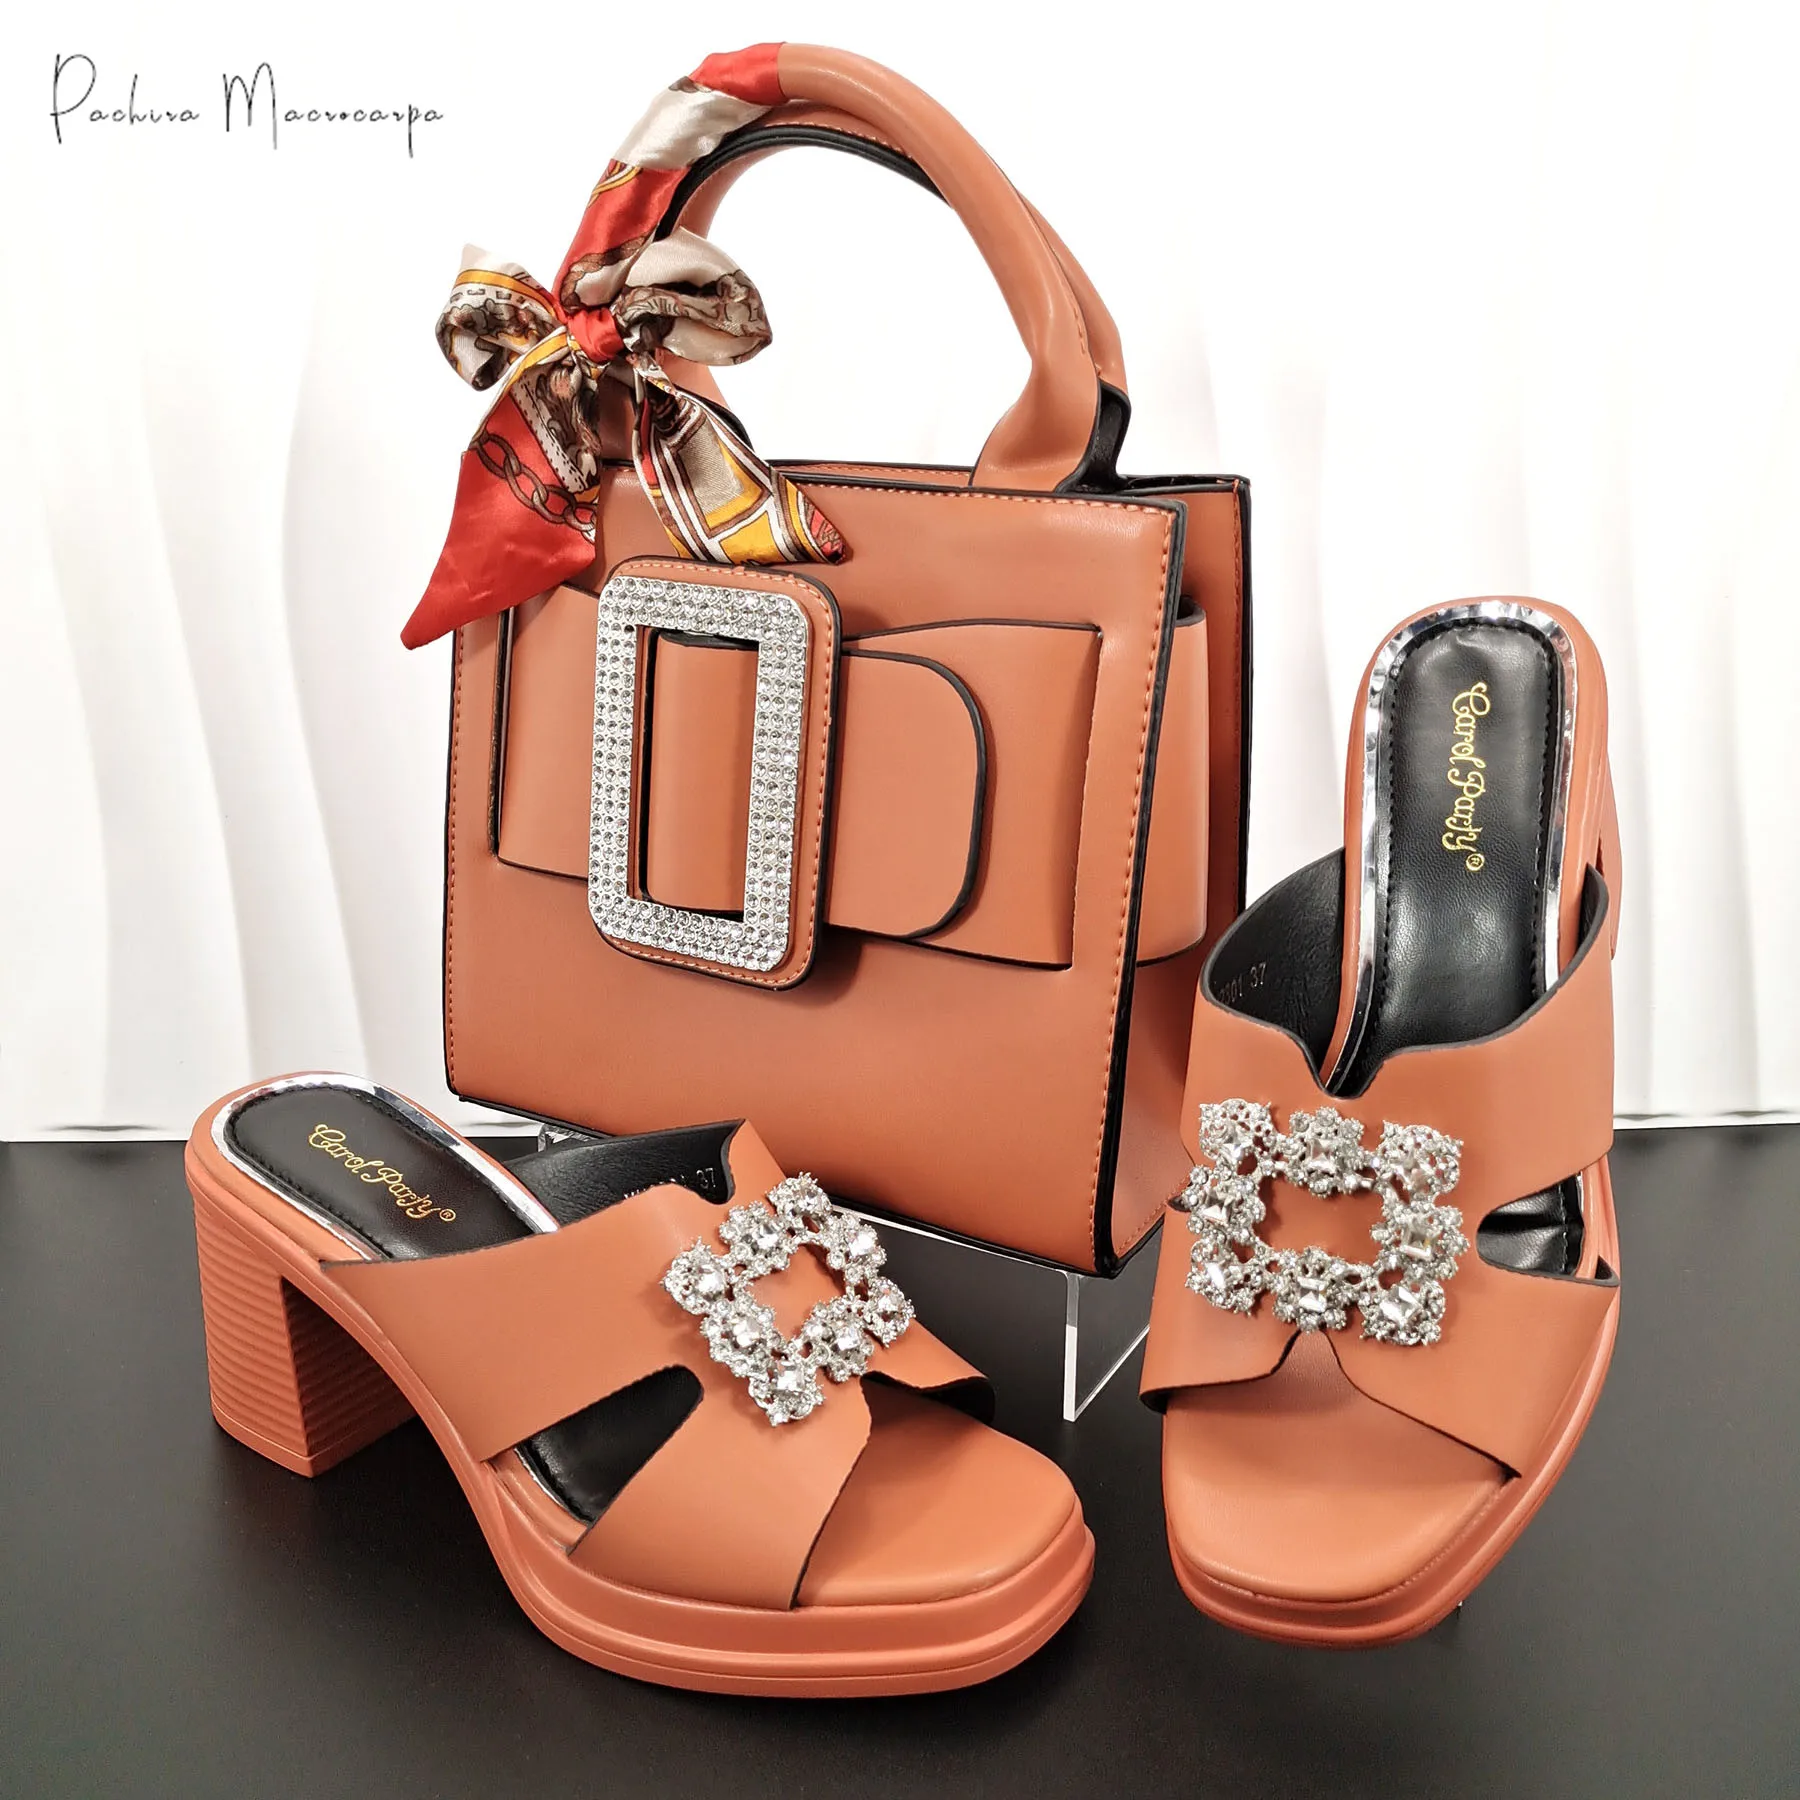 

Newest Platform Design Fashion Mature Style Orange Color Peep Toe Women Shoes and Square Fine Clutch Bag Set for Party Wedding